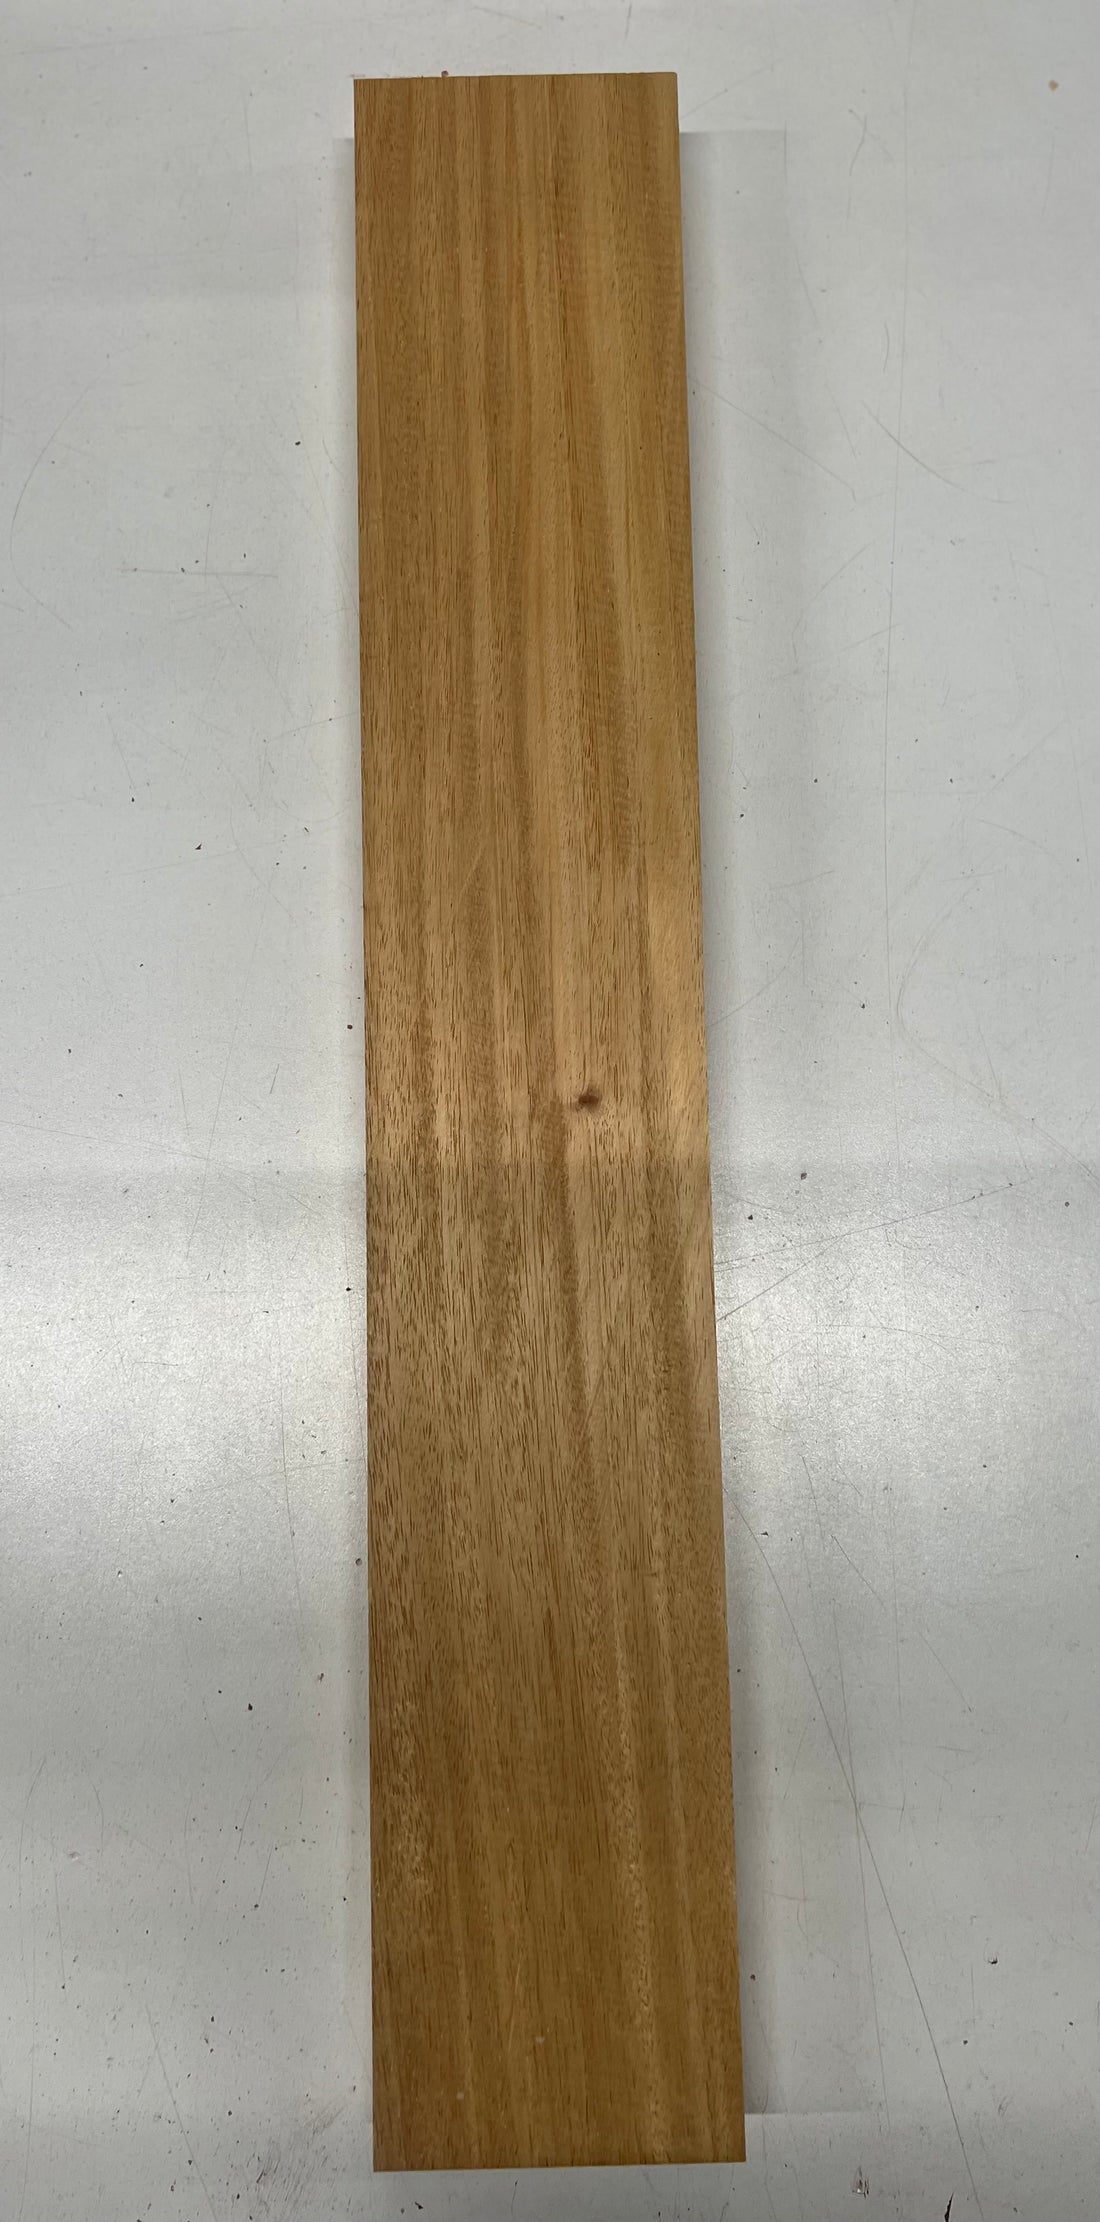 Fijian mahogany Lumber Board Wood Blank 24&quot;x 4&quot;x 1-1/4&quot; 